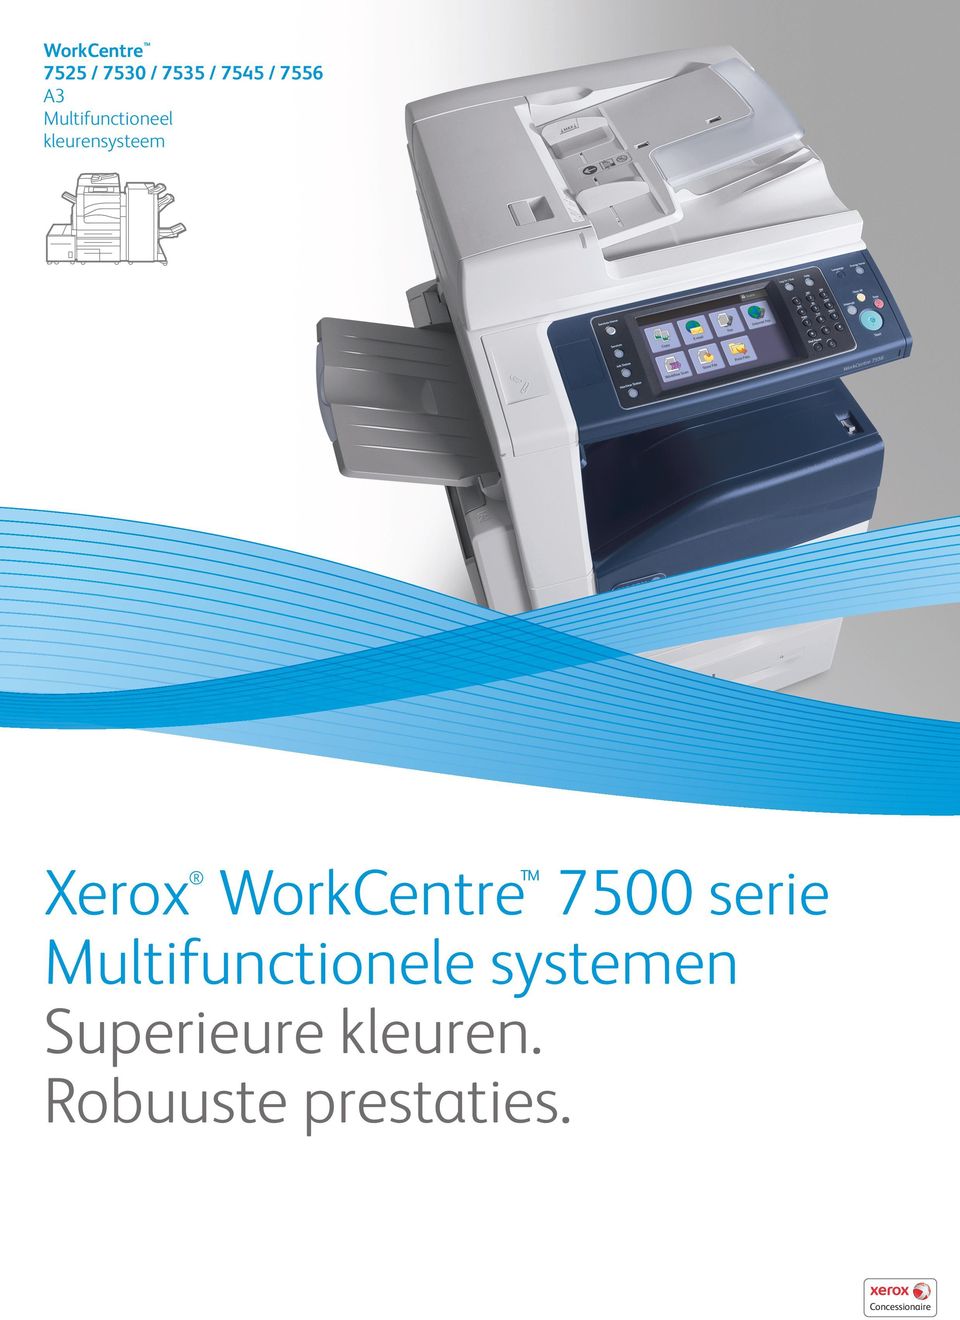 WorkCentre 7500 serie Multifunctionele